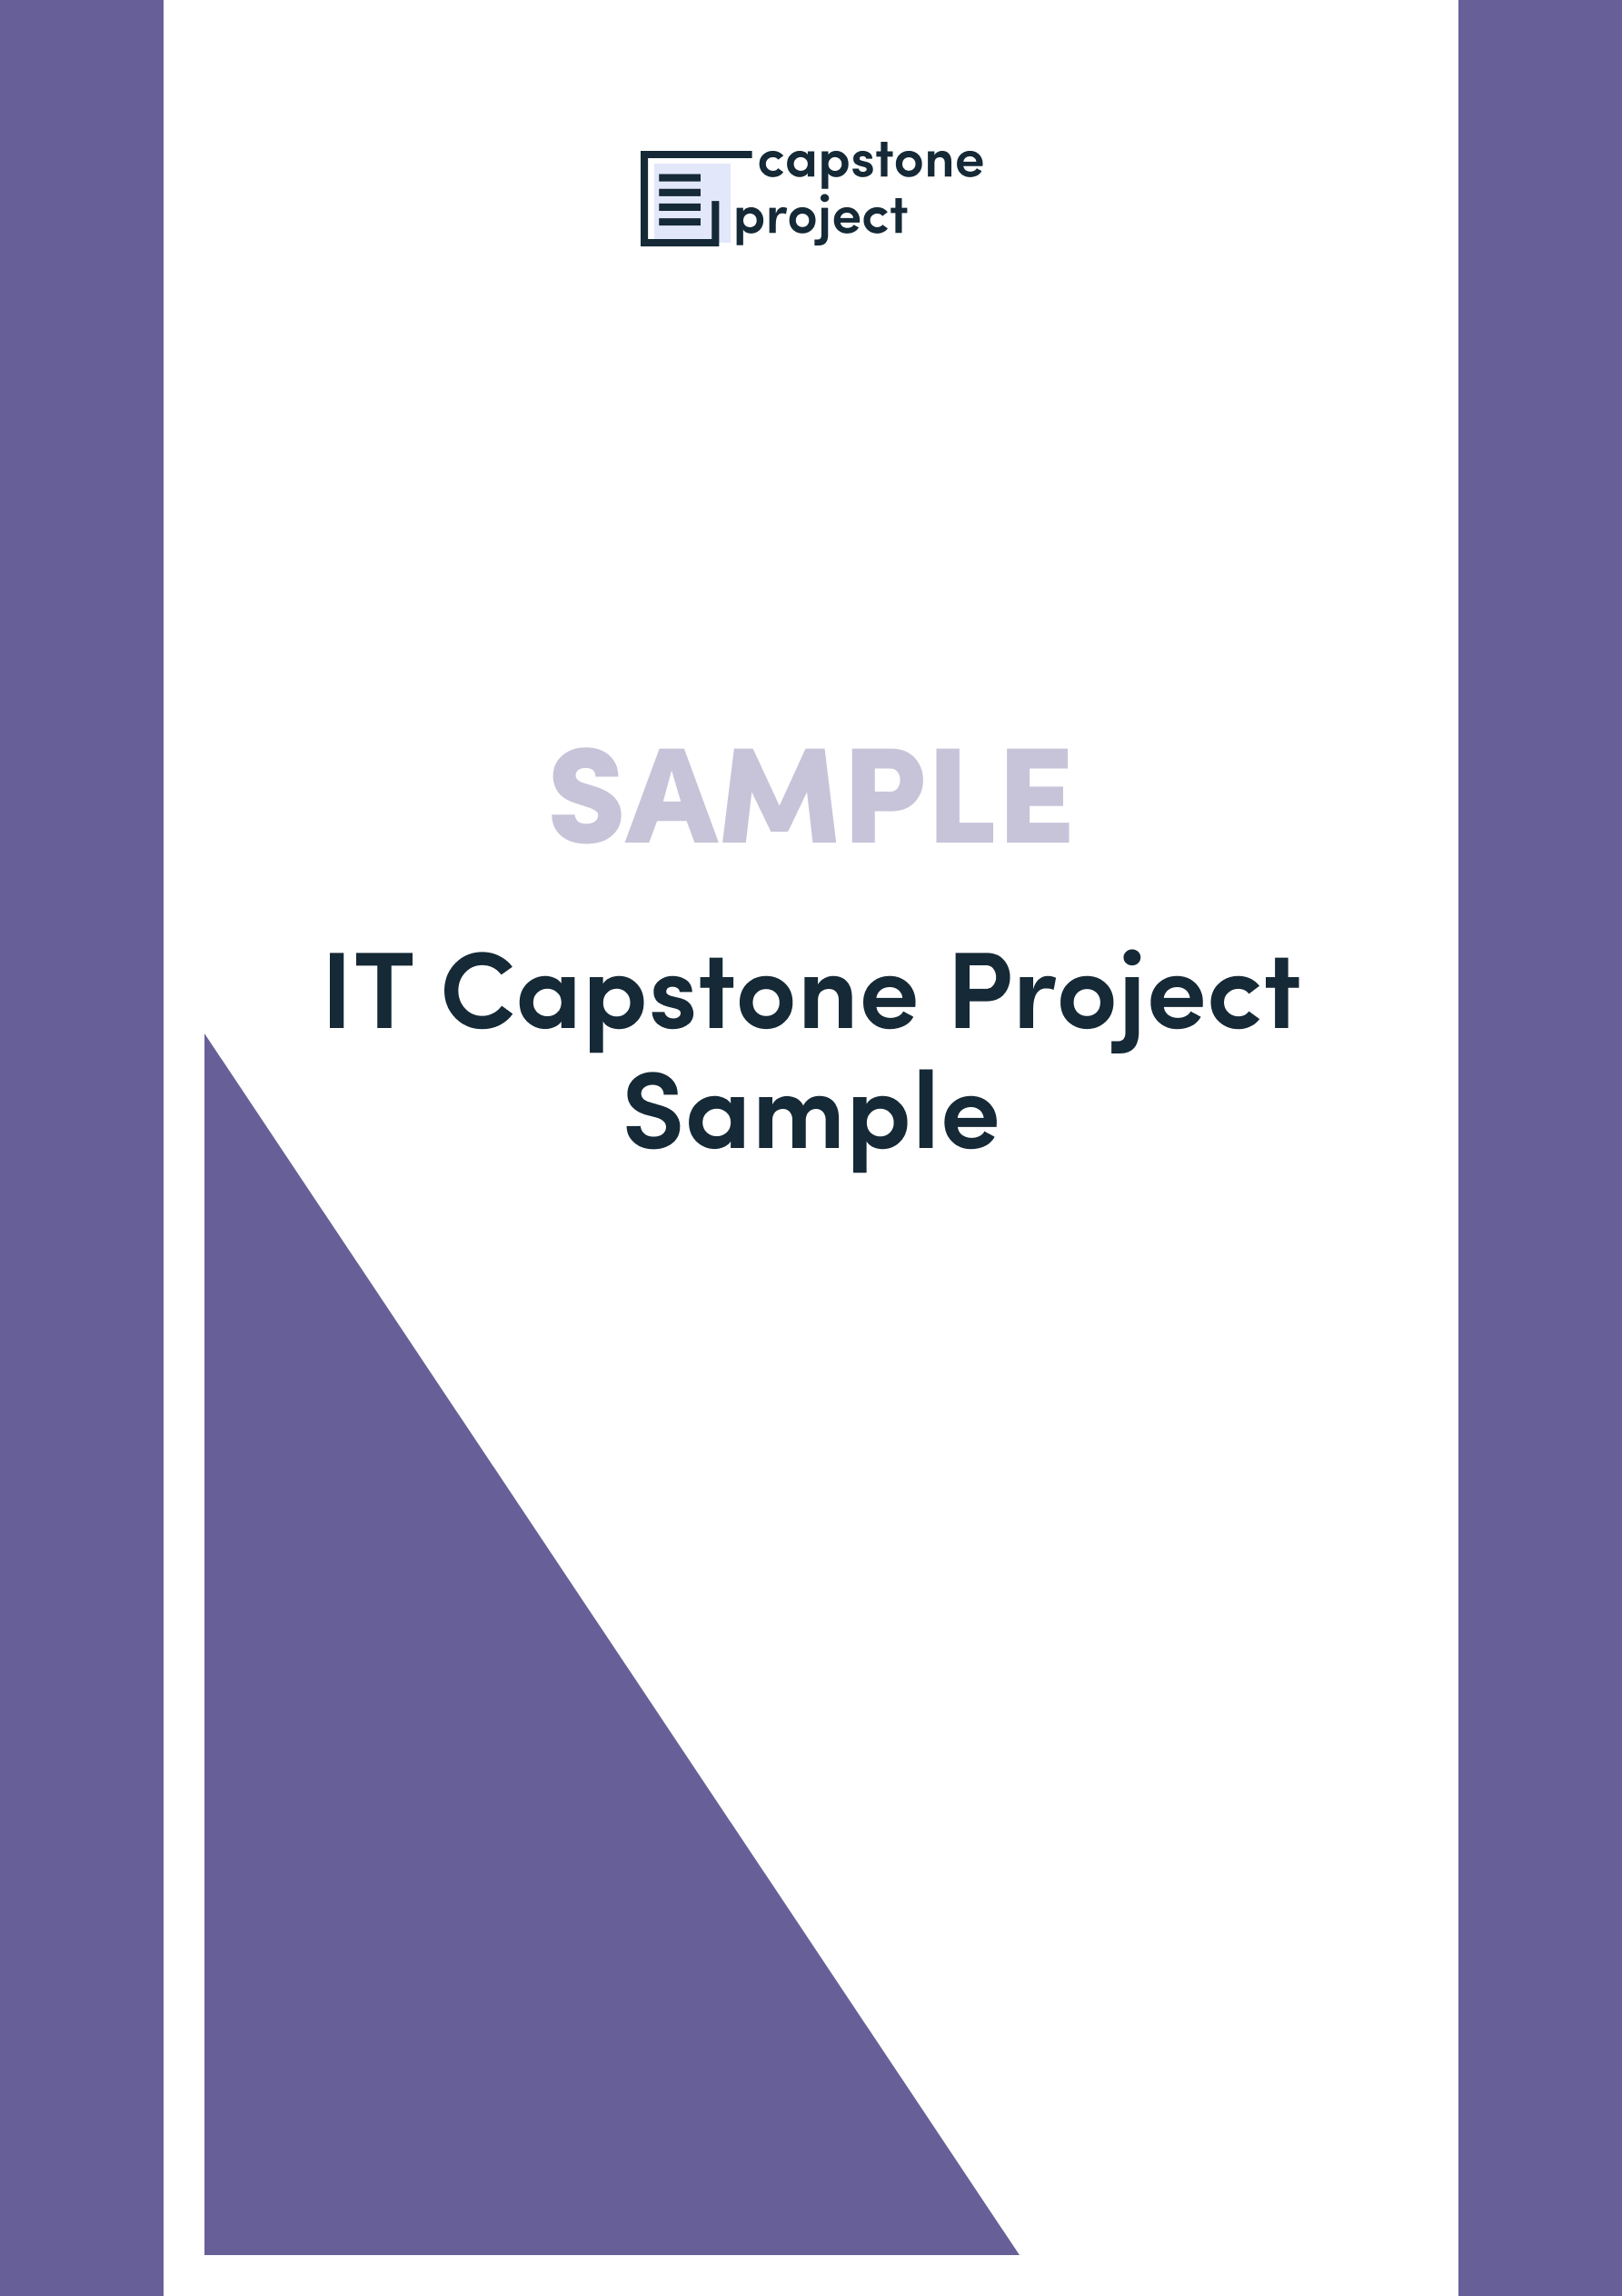 healthcare data science capstone project